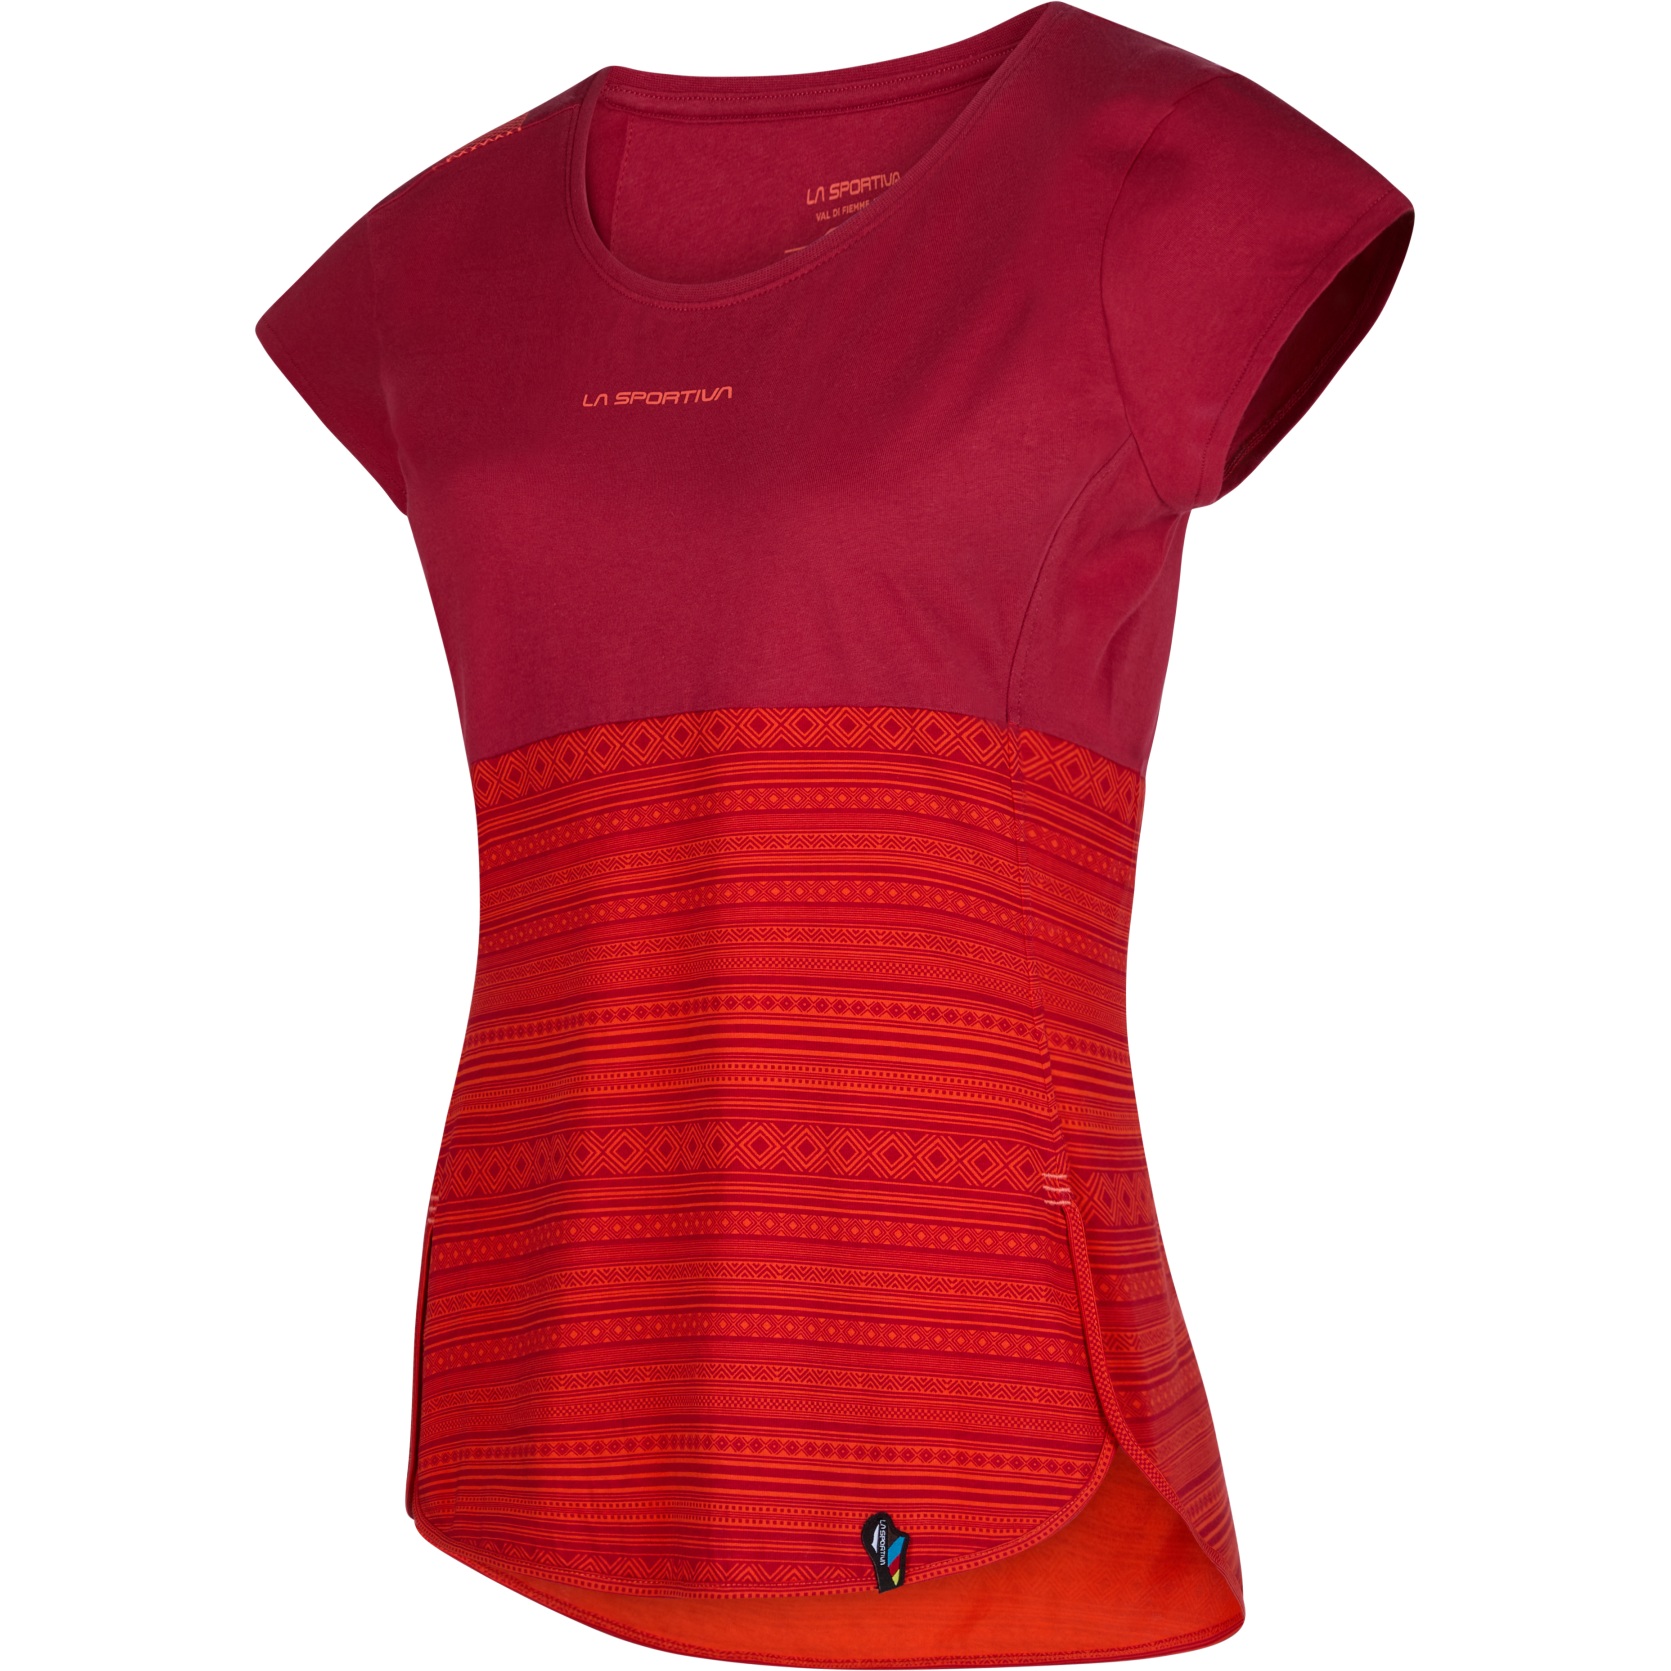 Productfoto van La Sportiva Lidra T-Shirt Dames - Velvet